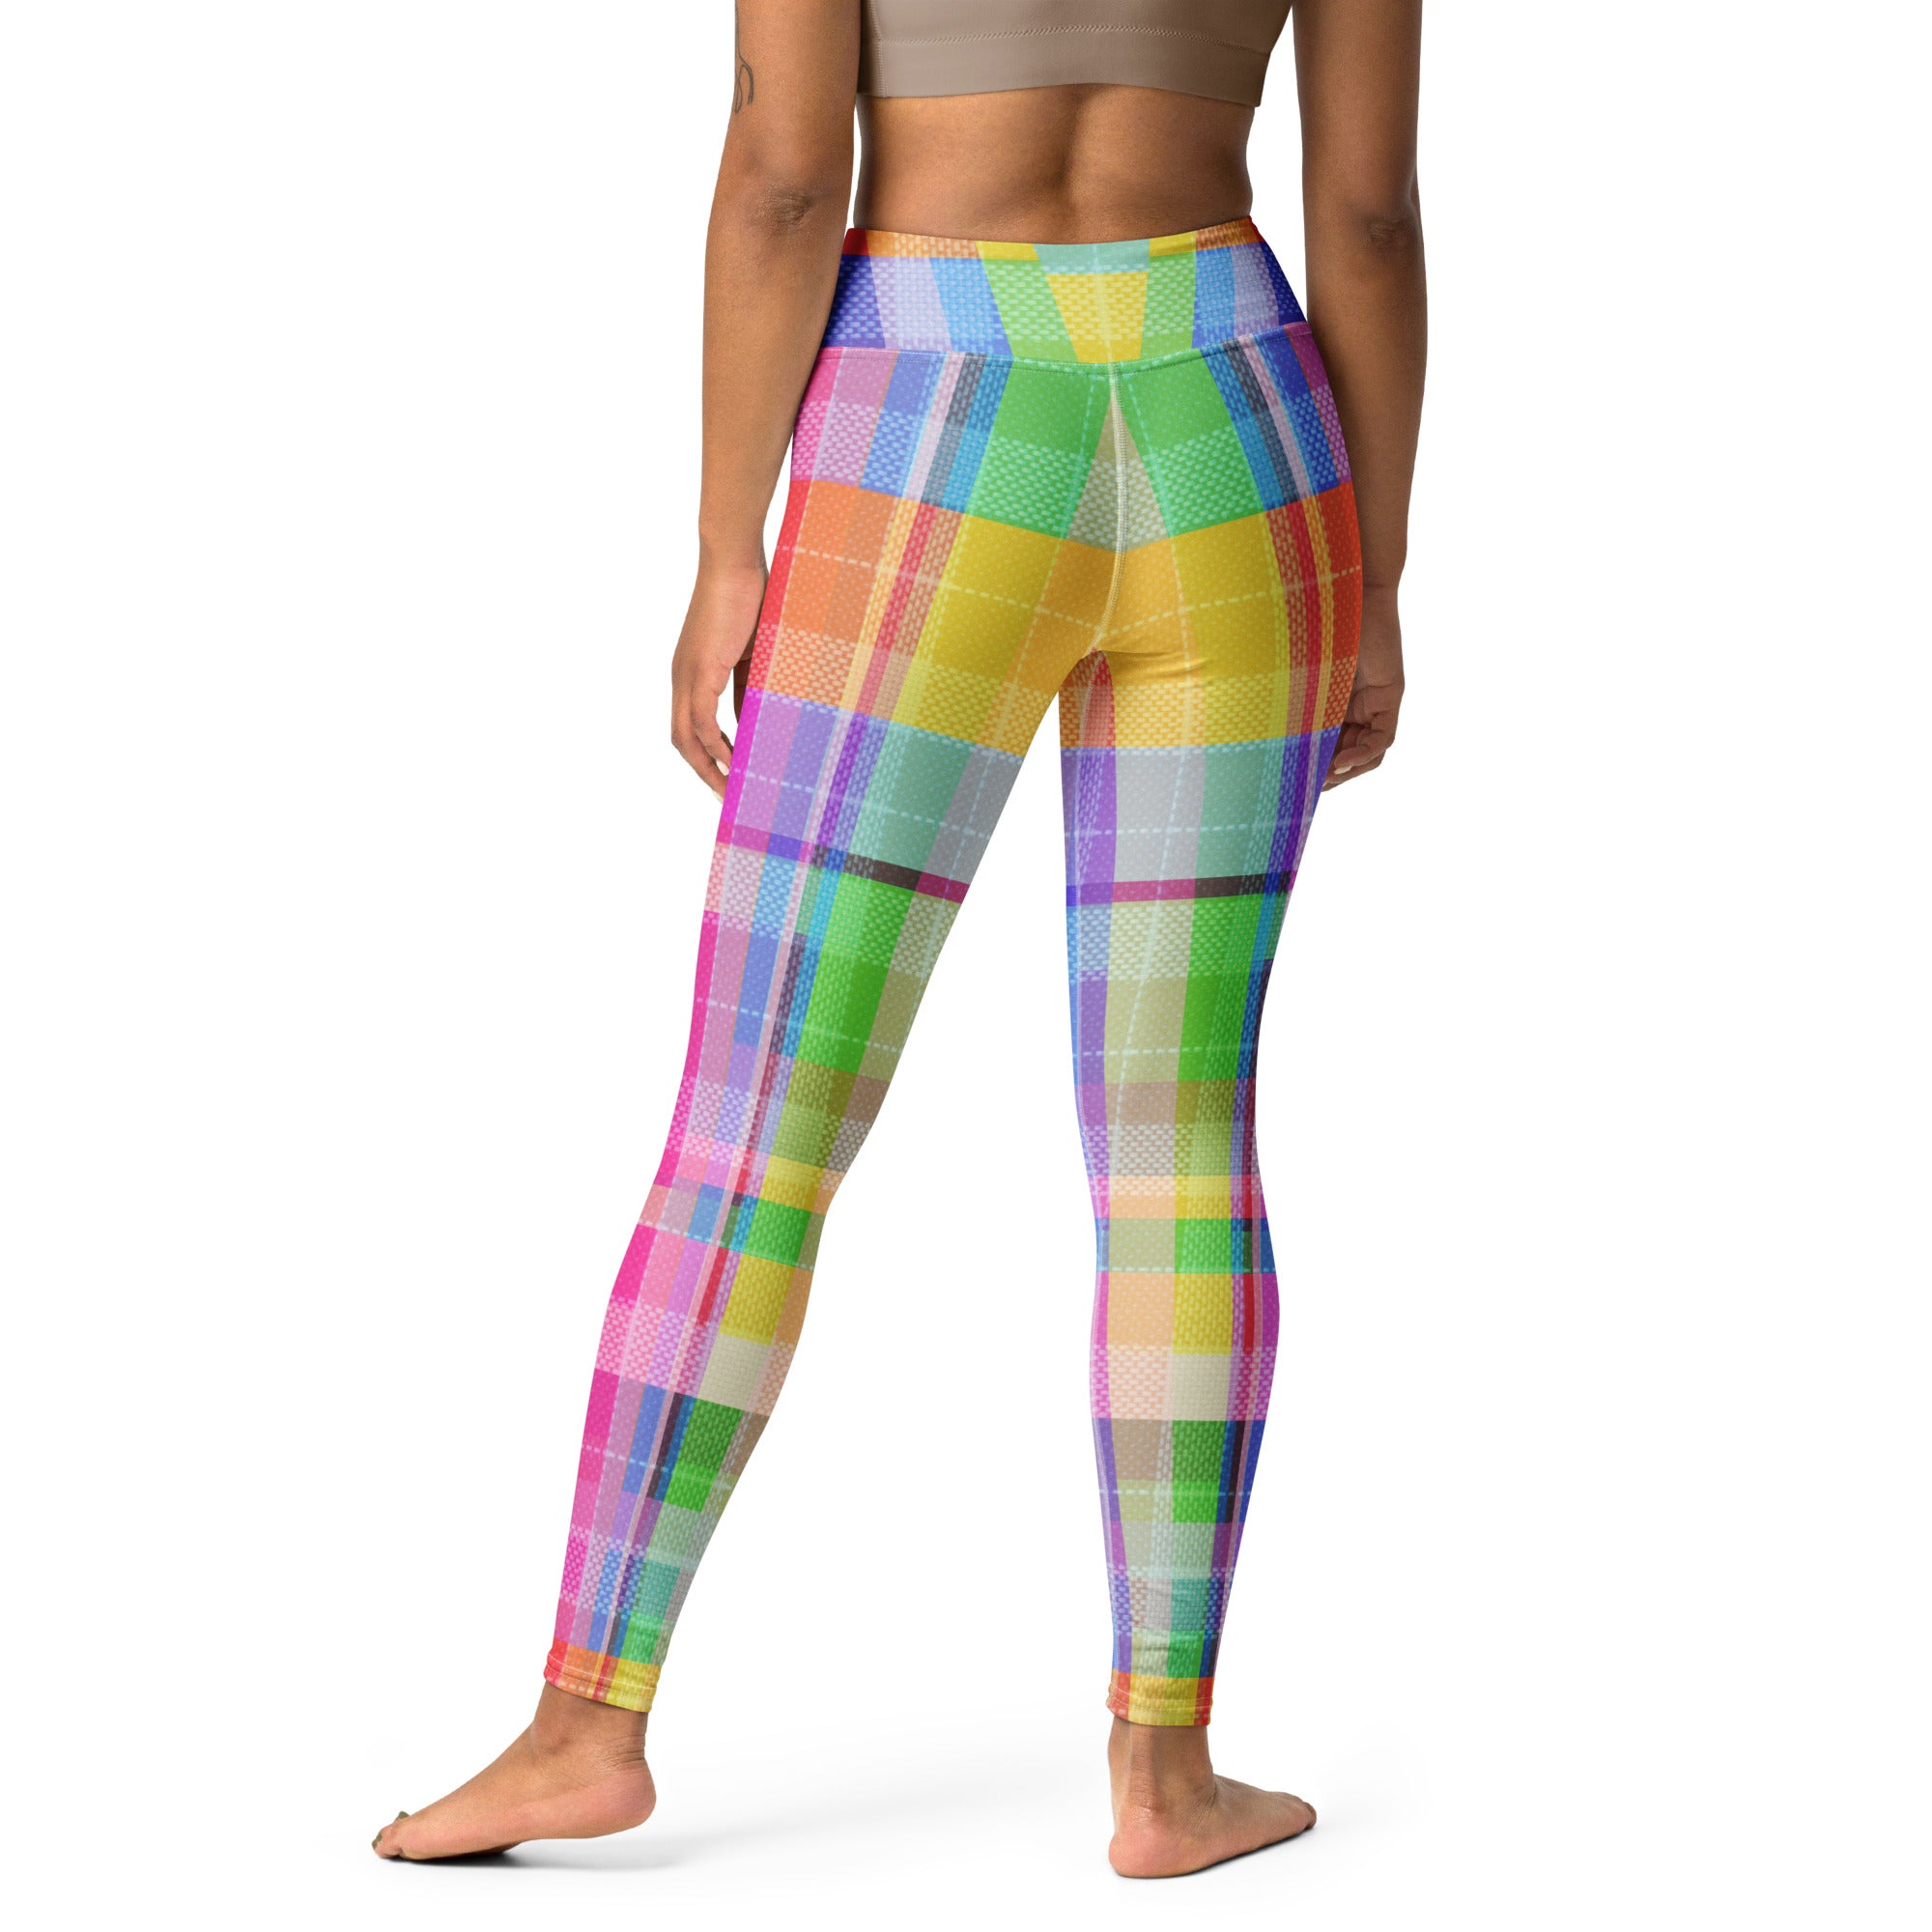 Fashion-forward look featuring Denim Horizon Yoga Leggings for a casual outing.